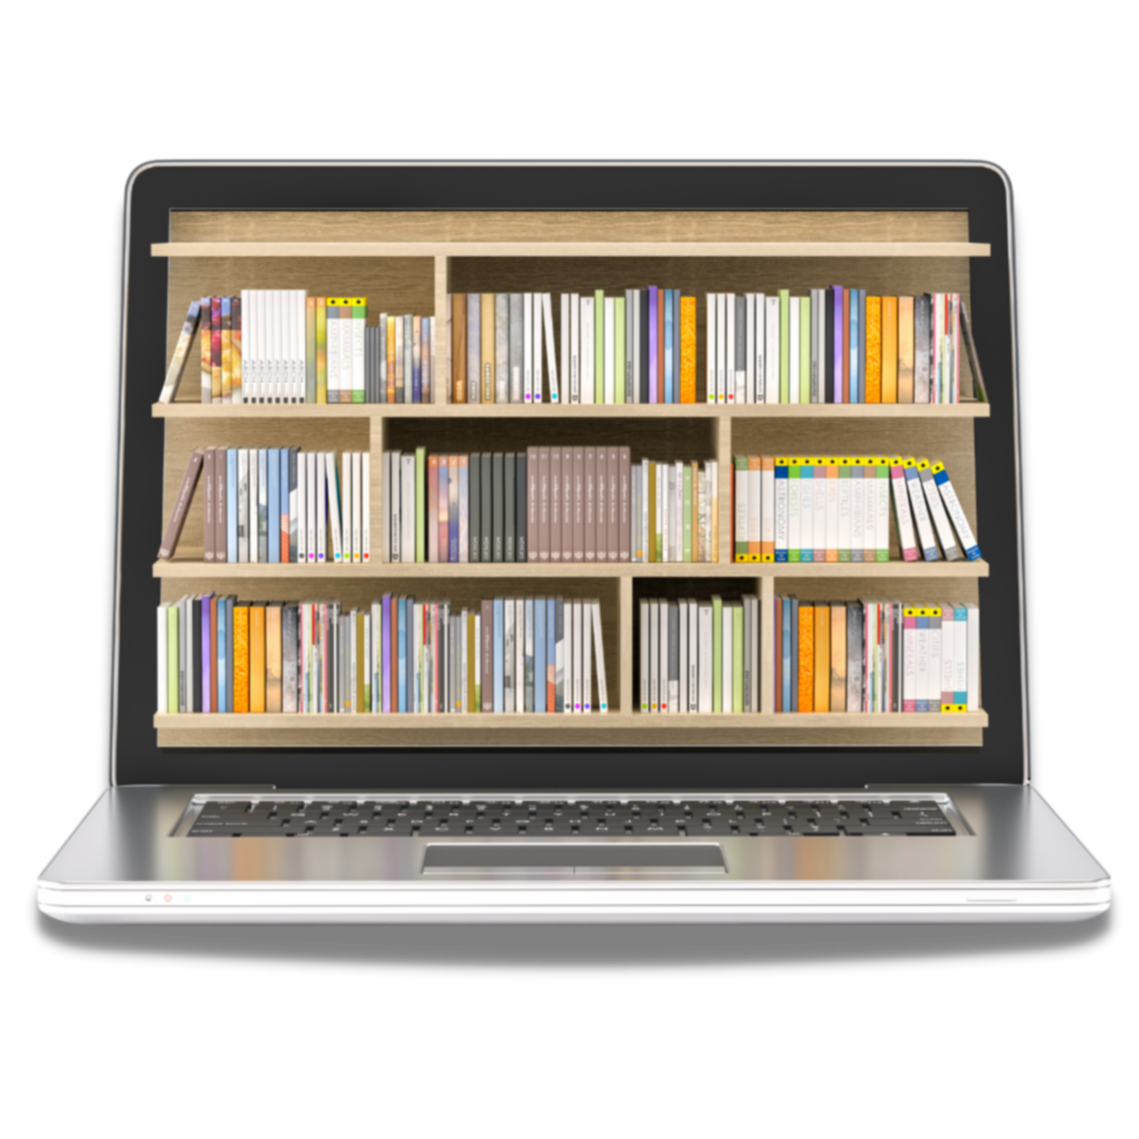 book shelf displayed on laptop screen